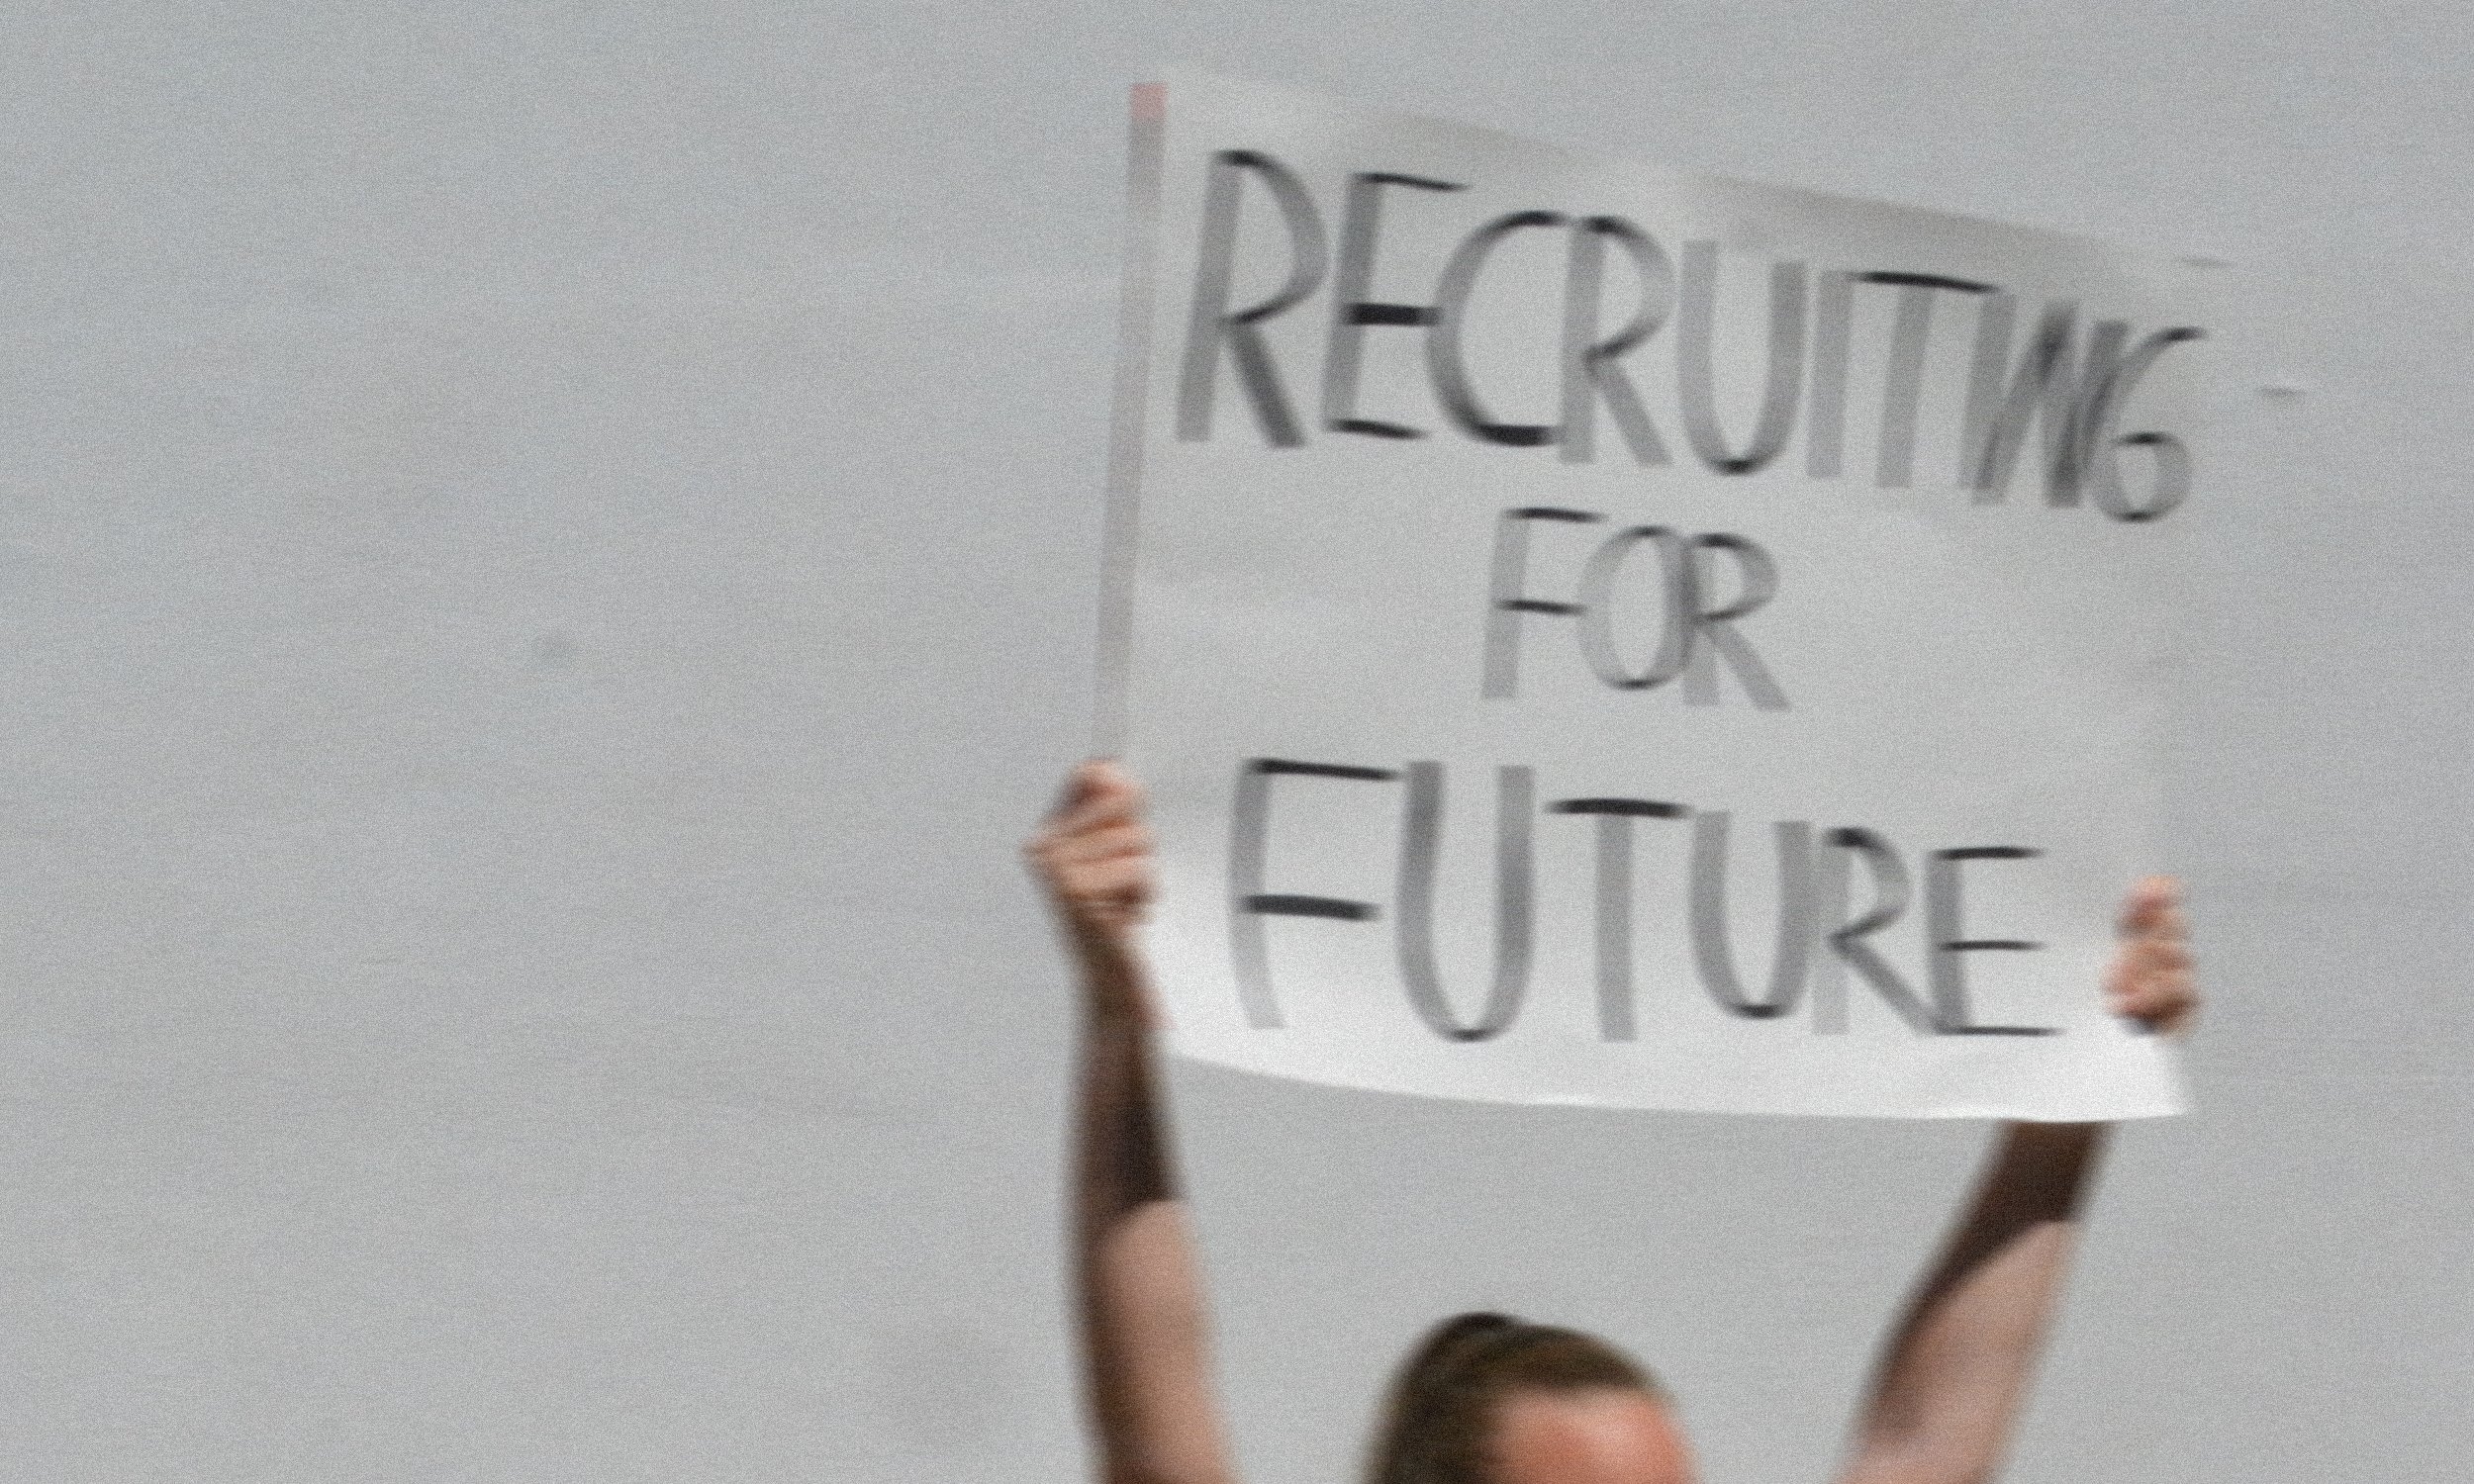 Recruiting for future.jpg